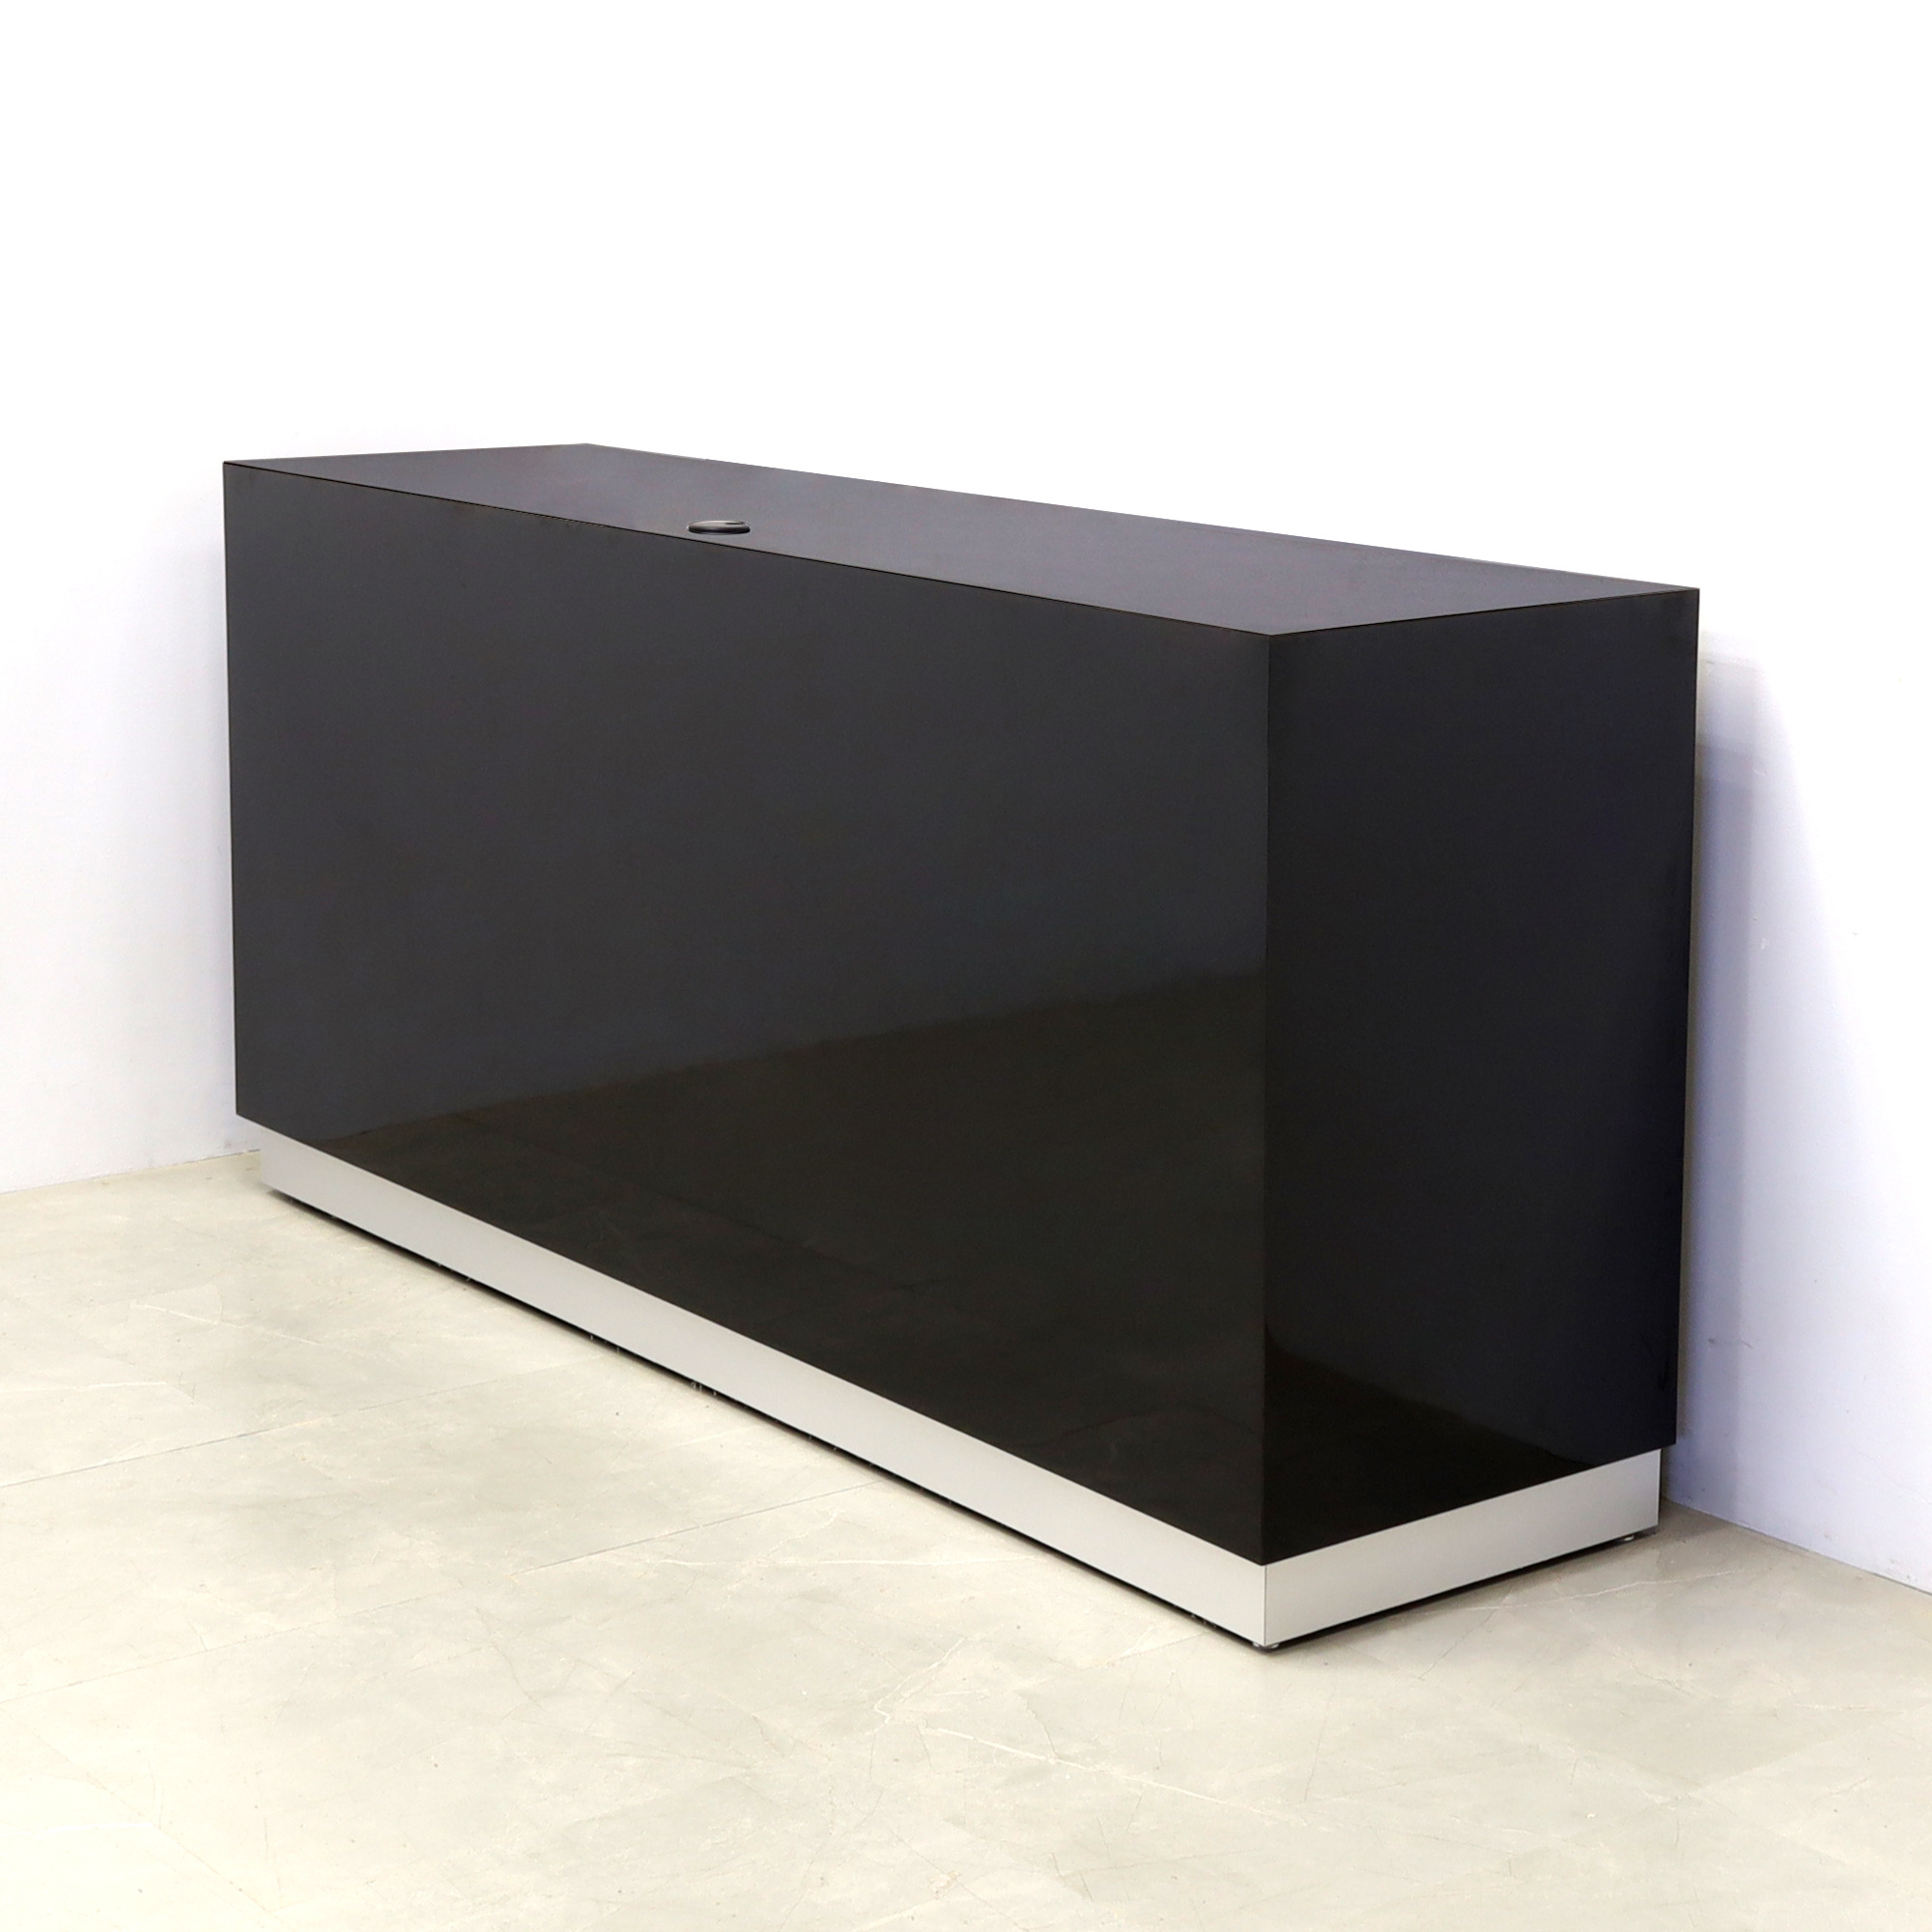 84-inch Houston Custom Reception Desk in black gloss laminate main desk and brushed aluminum toe-kick, shown here.